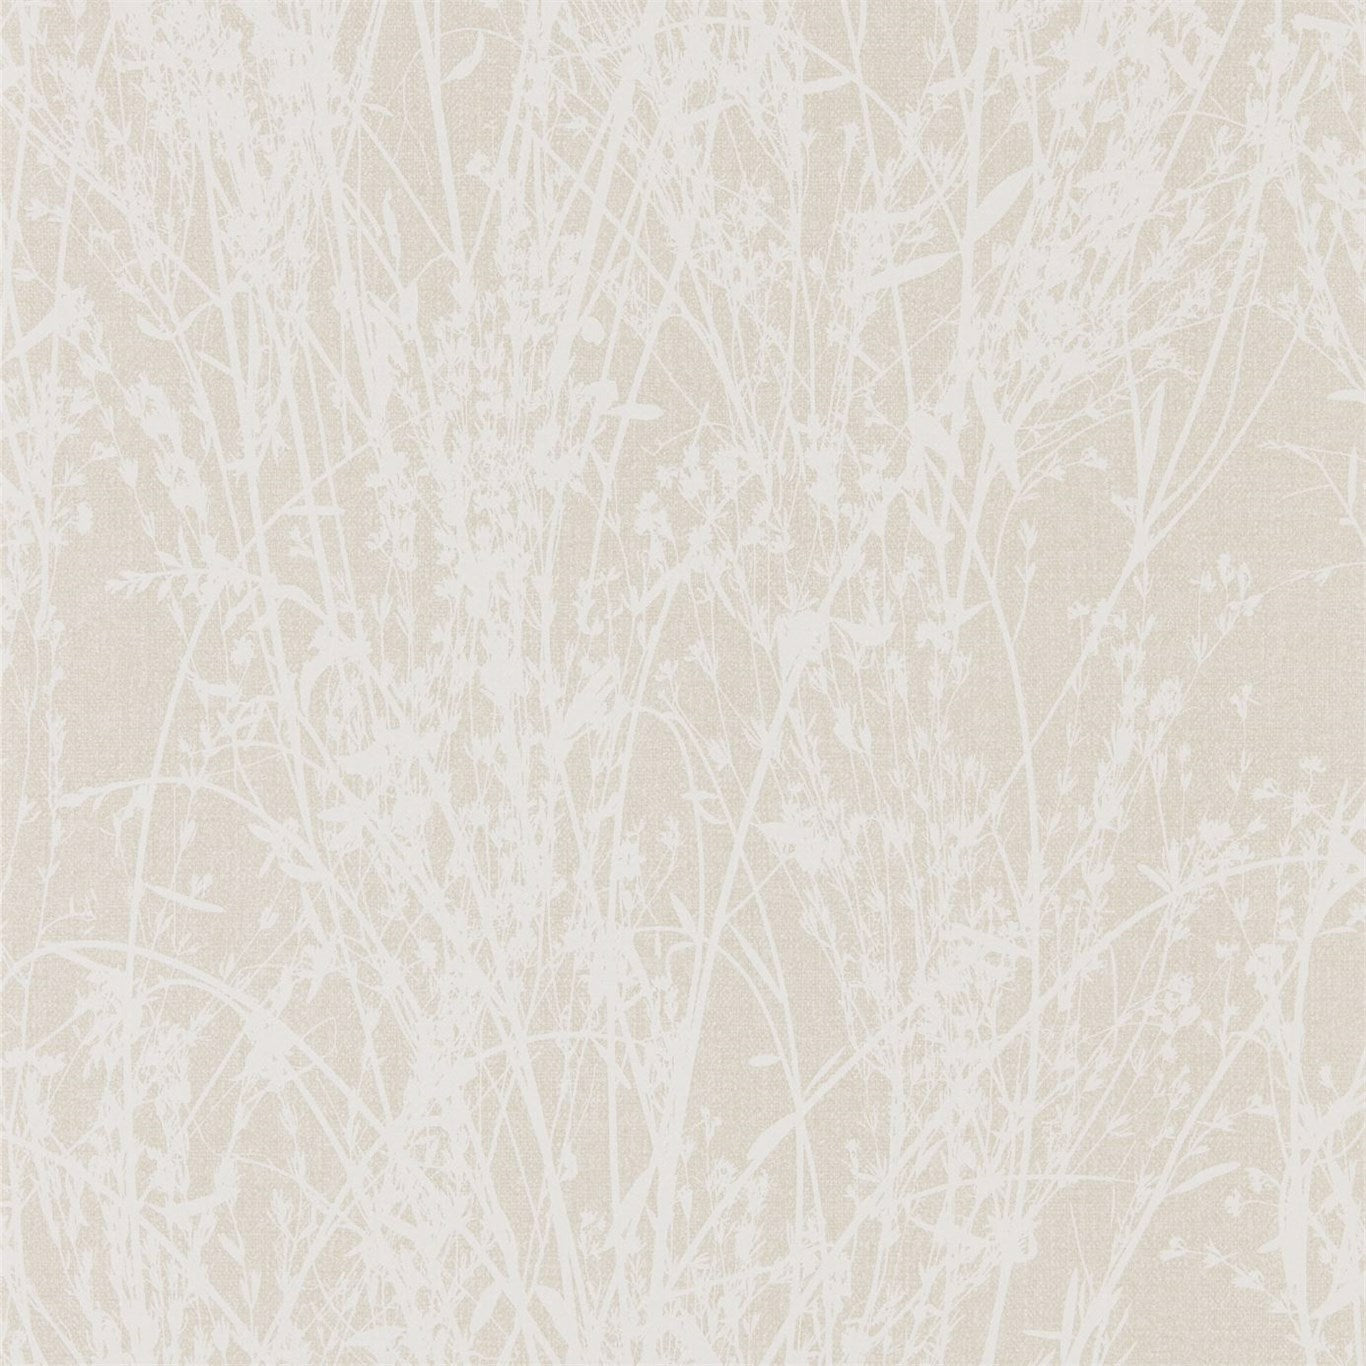 Meadow Canvas White/Parchment Wallpaper DWOW215695 by Sanderson